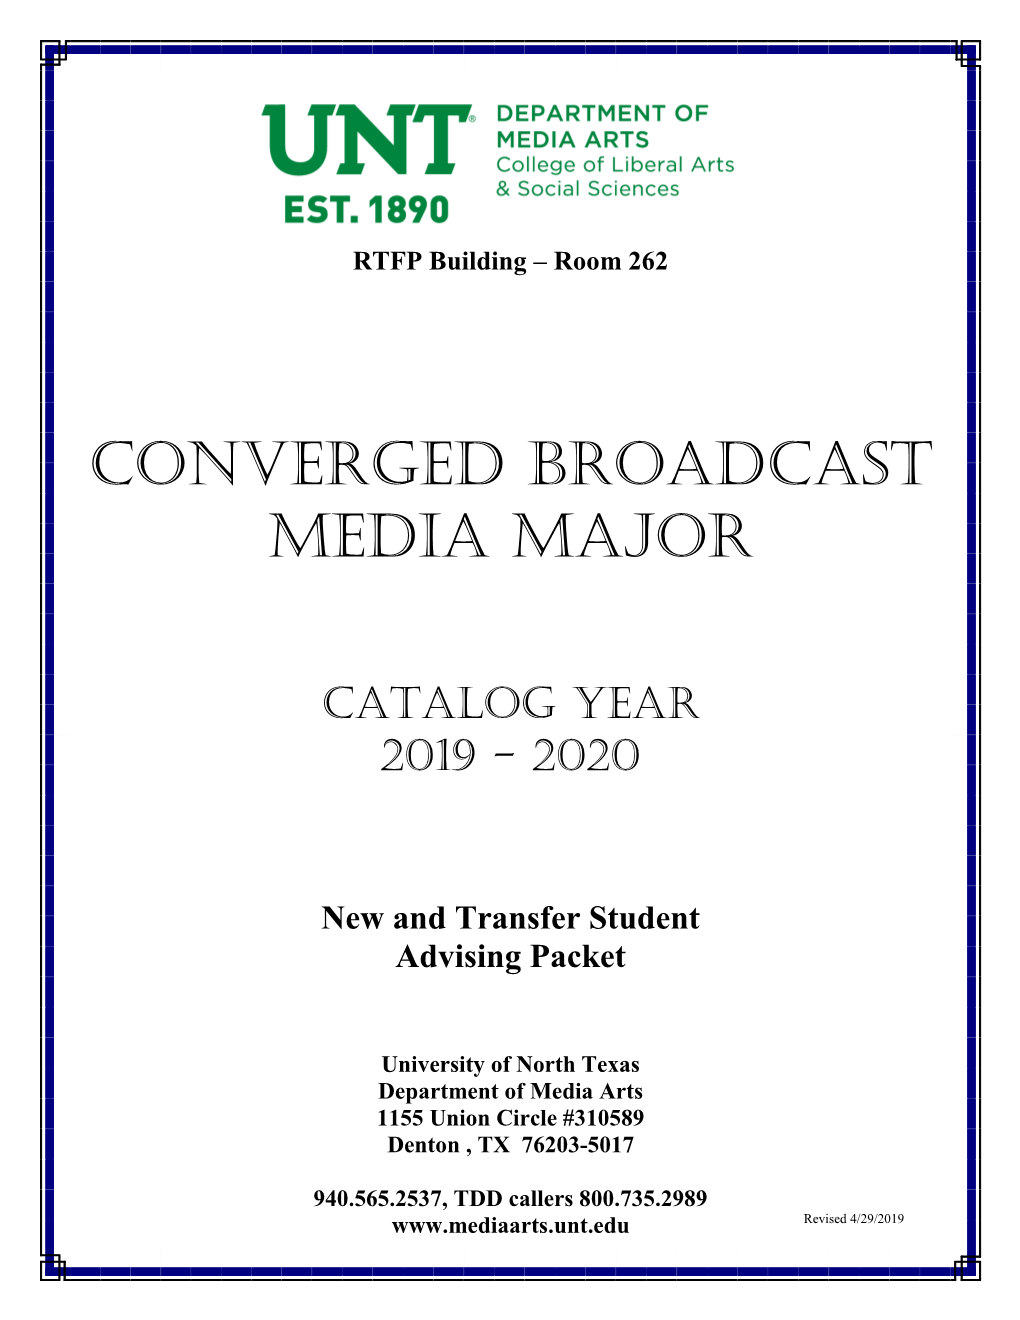 Converged Broadcast Media Major